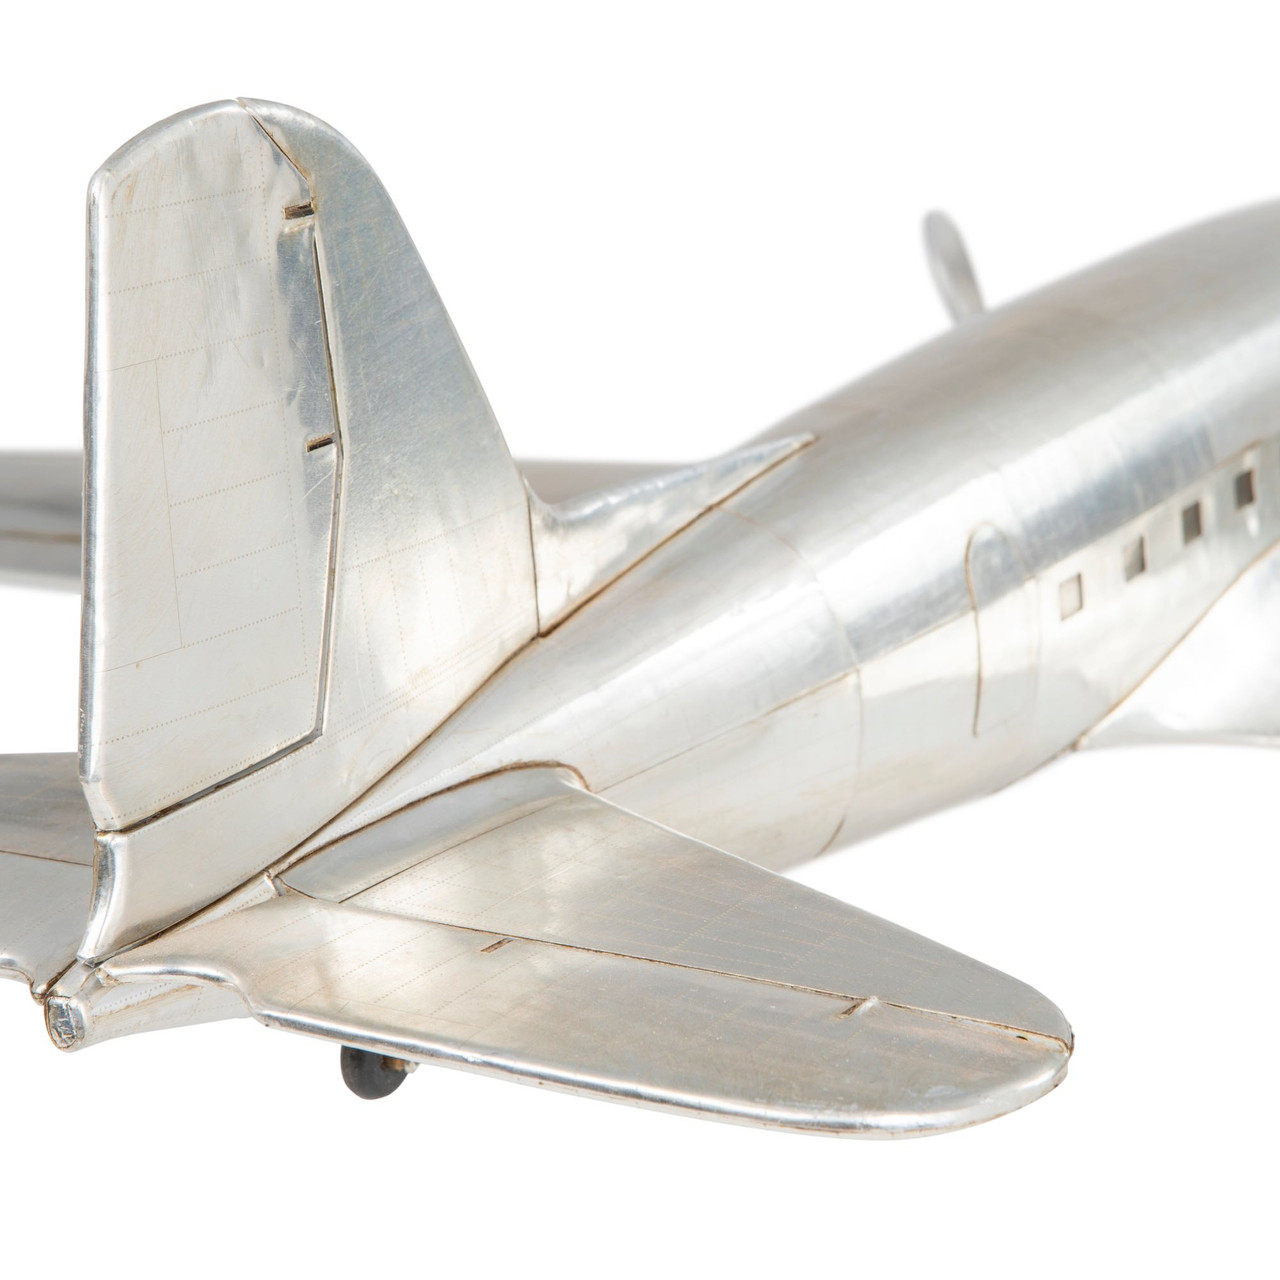 Douglas Dakota DC 3 Aluminum Airplane Model Aircraft